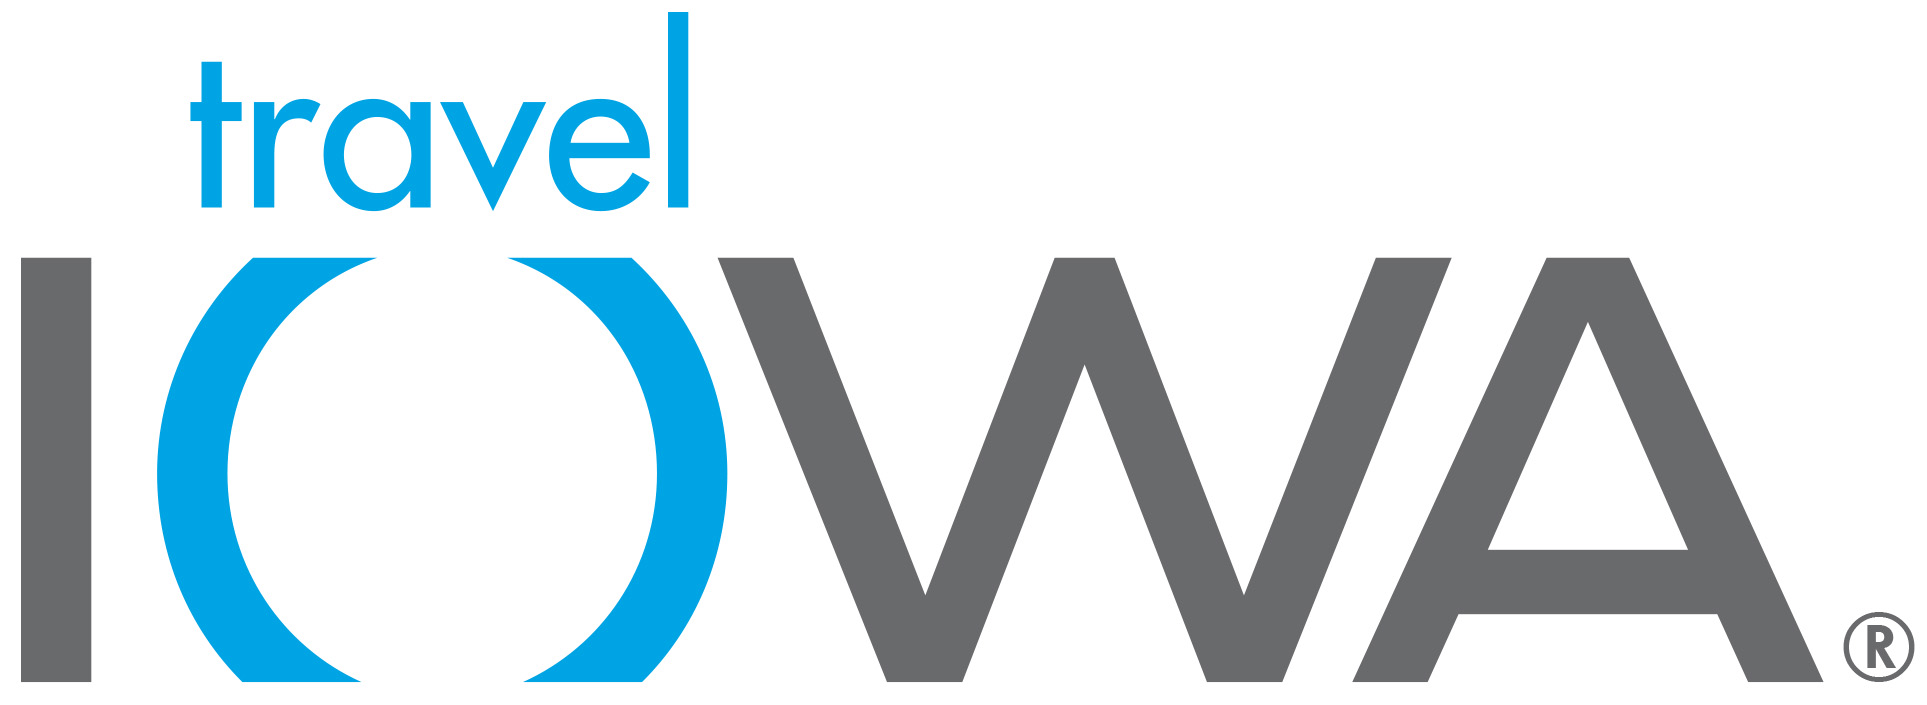 traveliowa.com logo